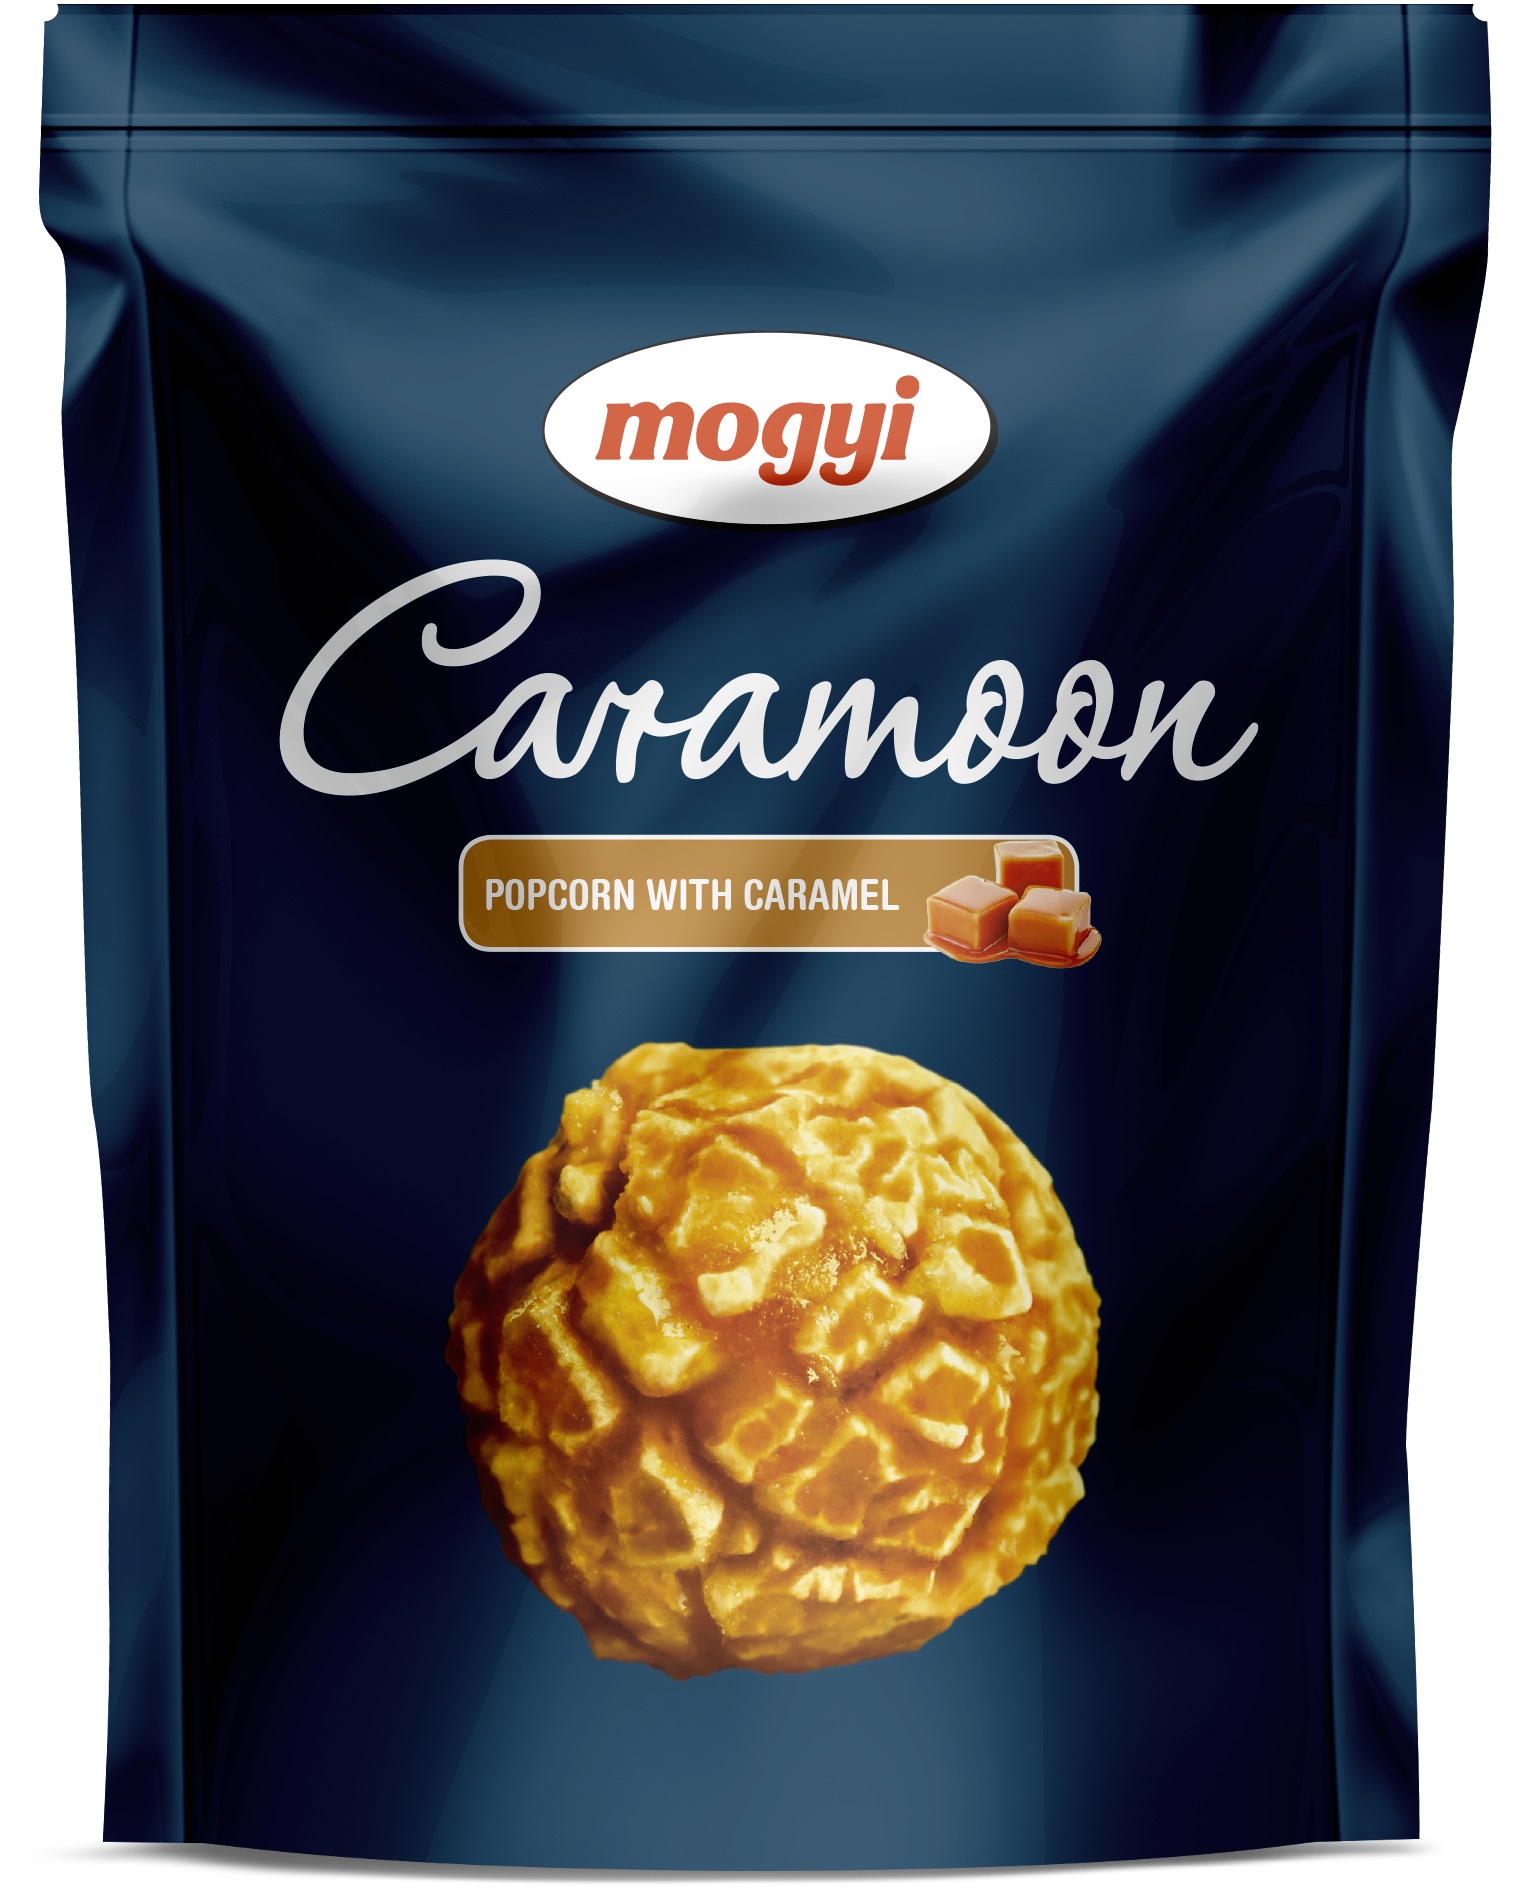 Mogyi Caramoon Popcorn with caramel flavor